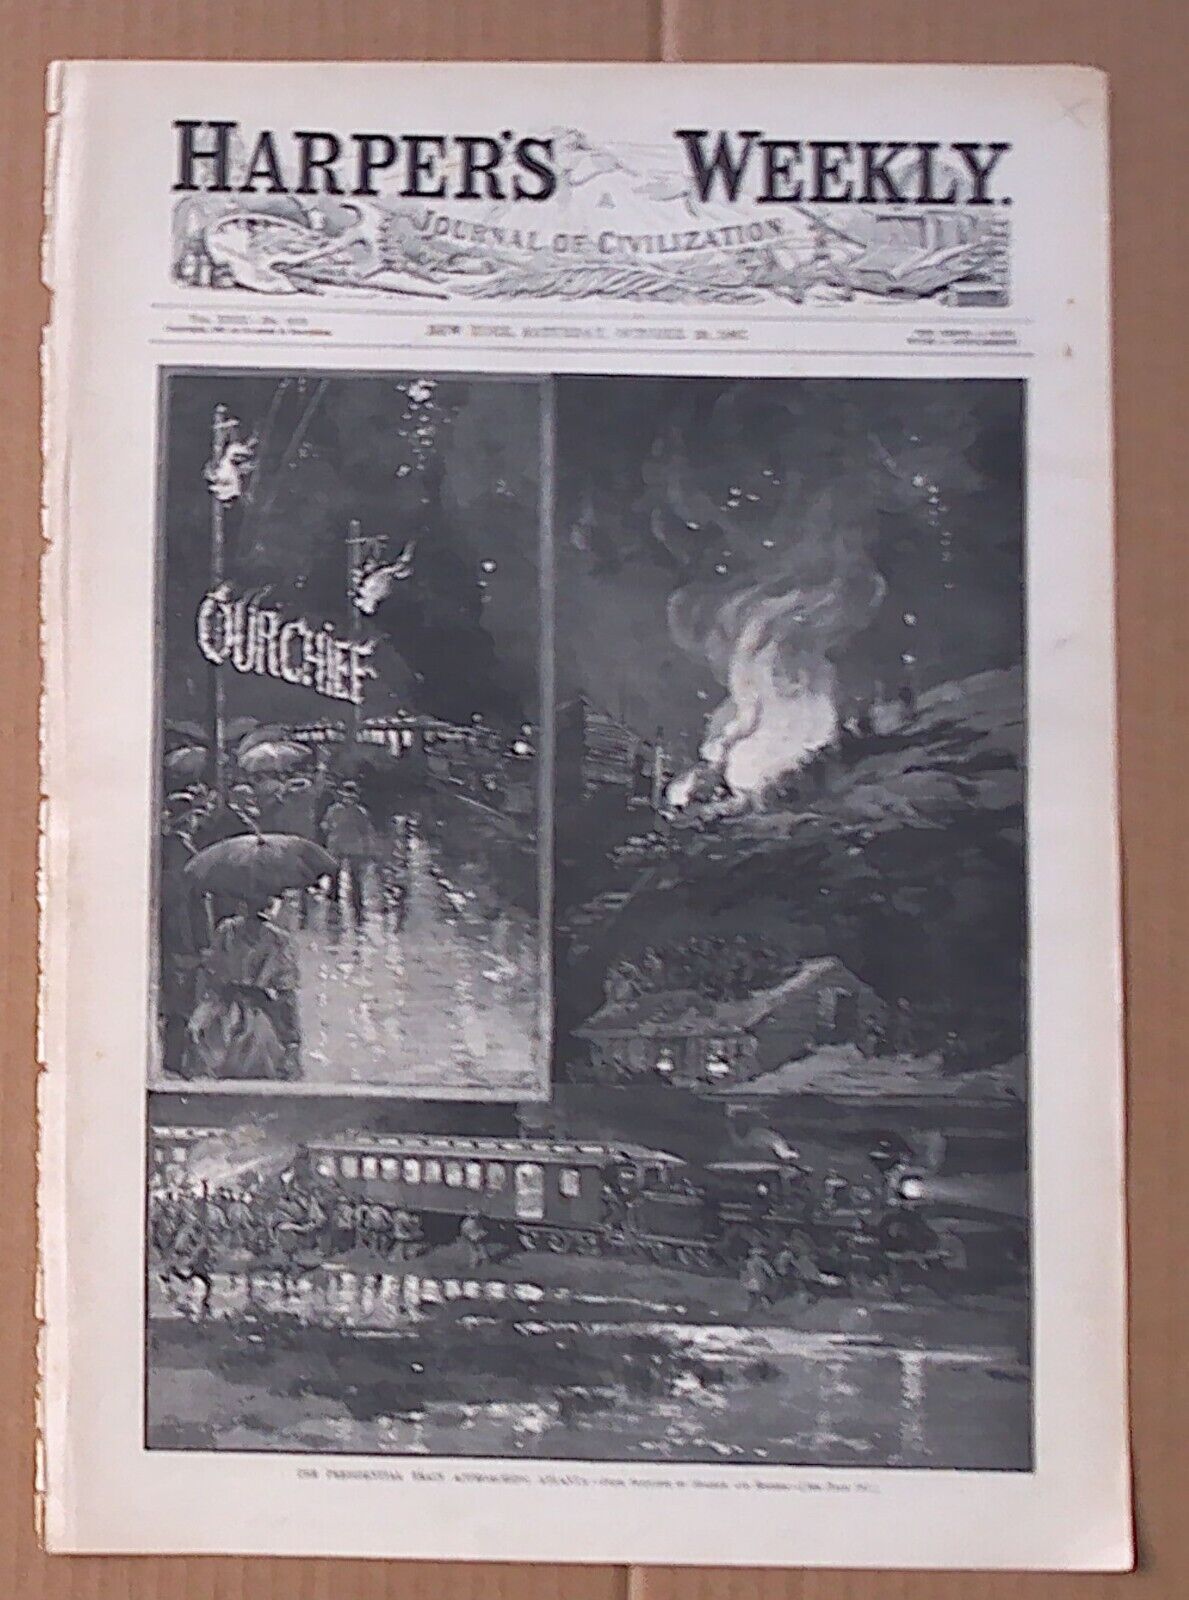 Harper's Weekly Cover October 29, 1887